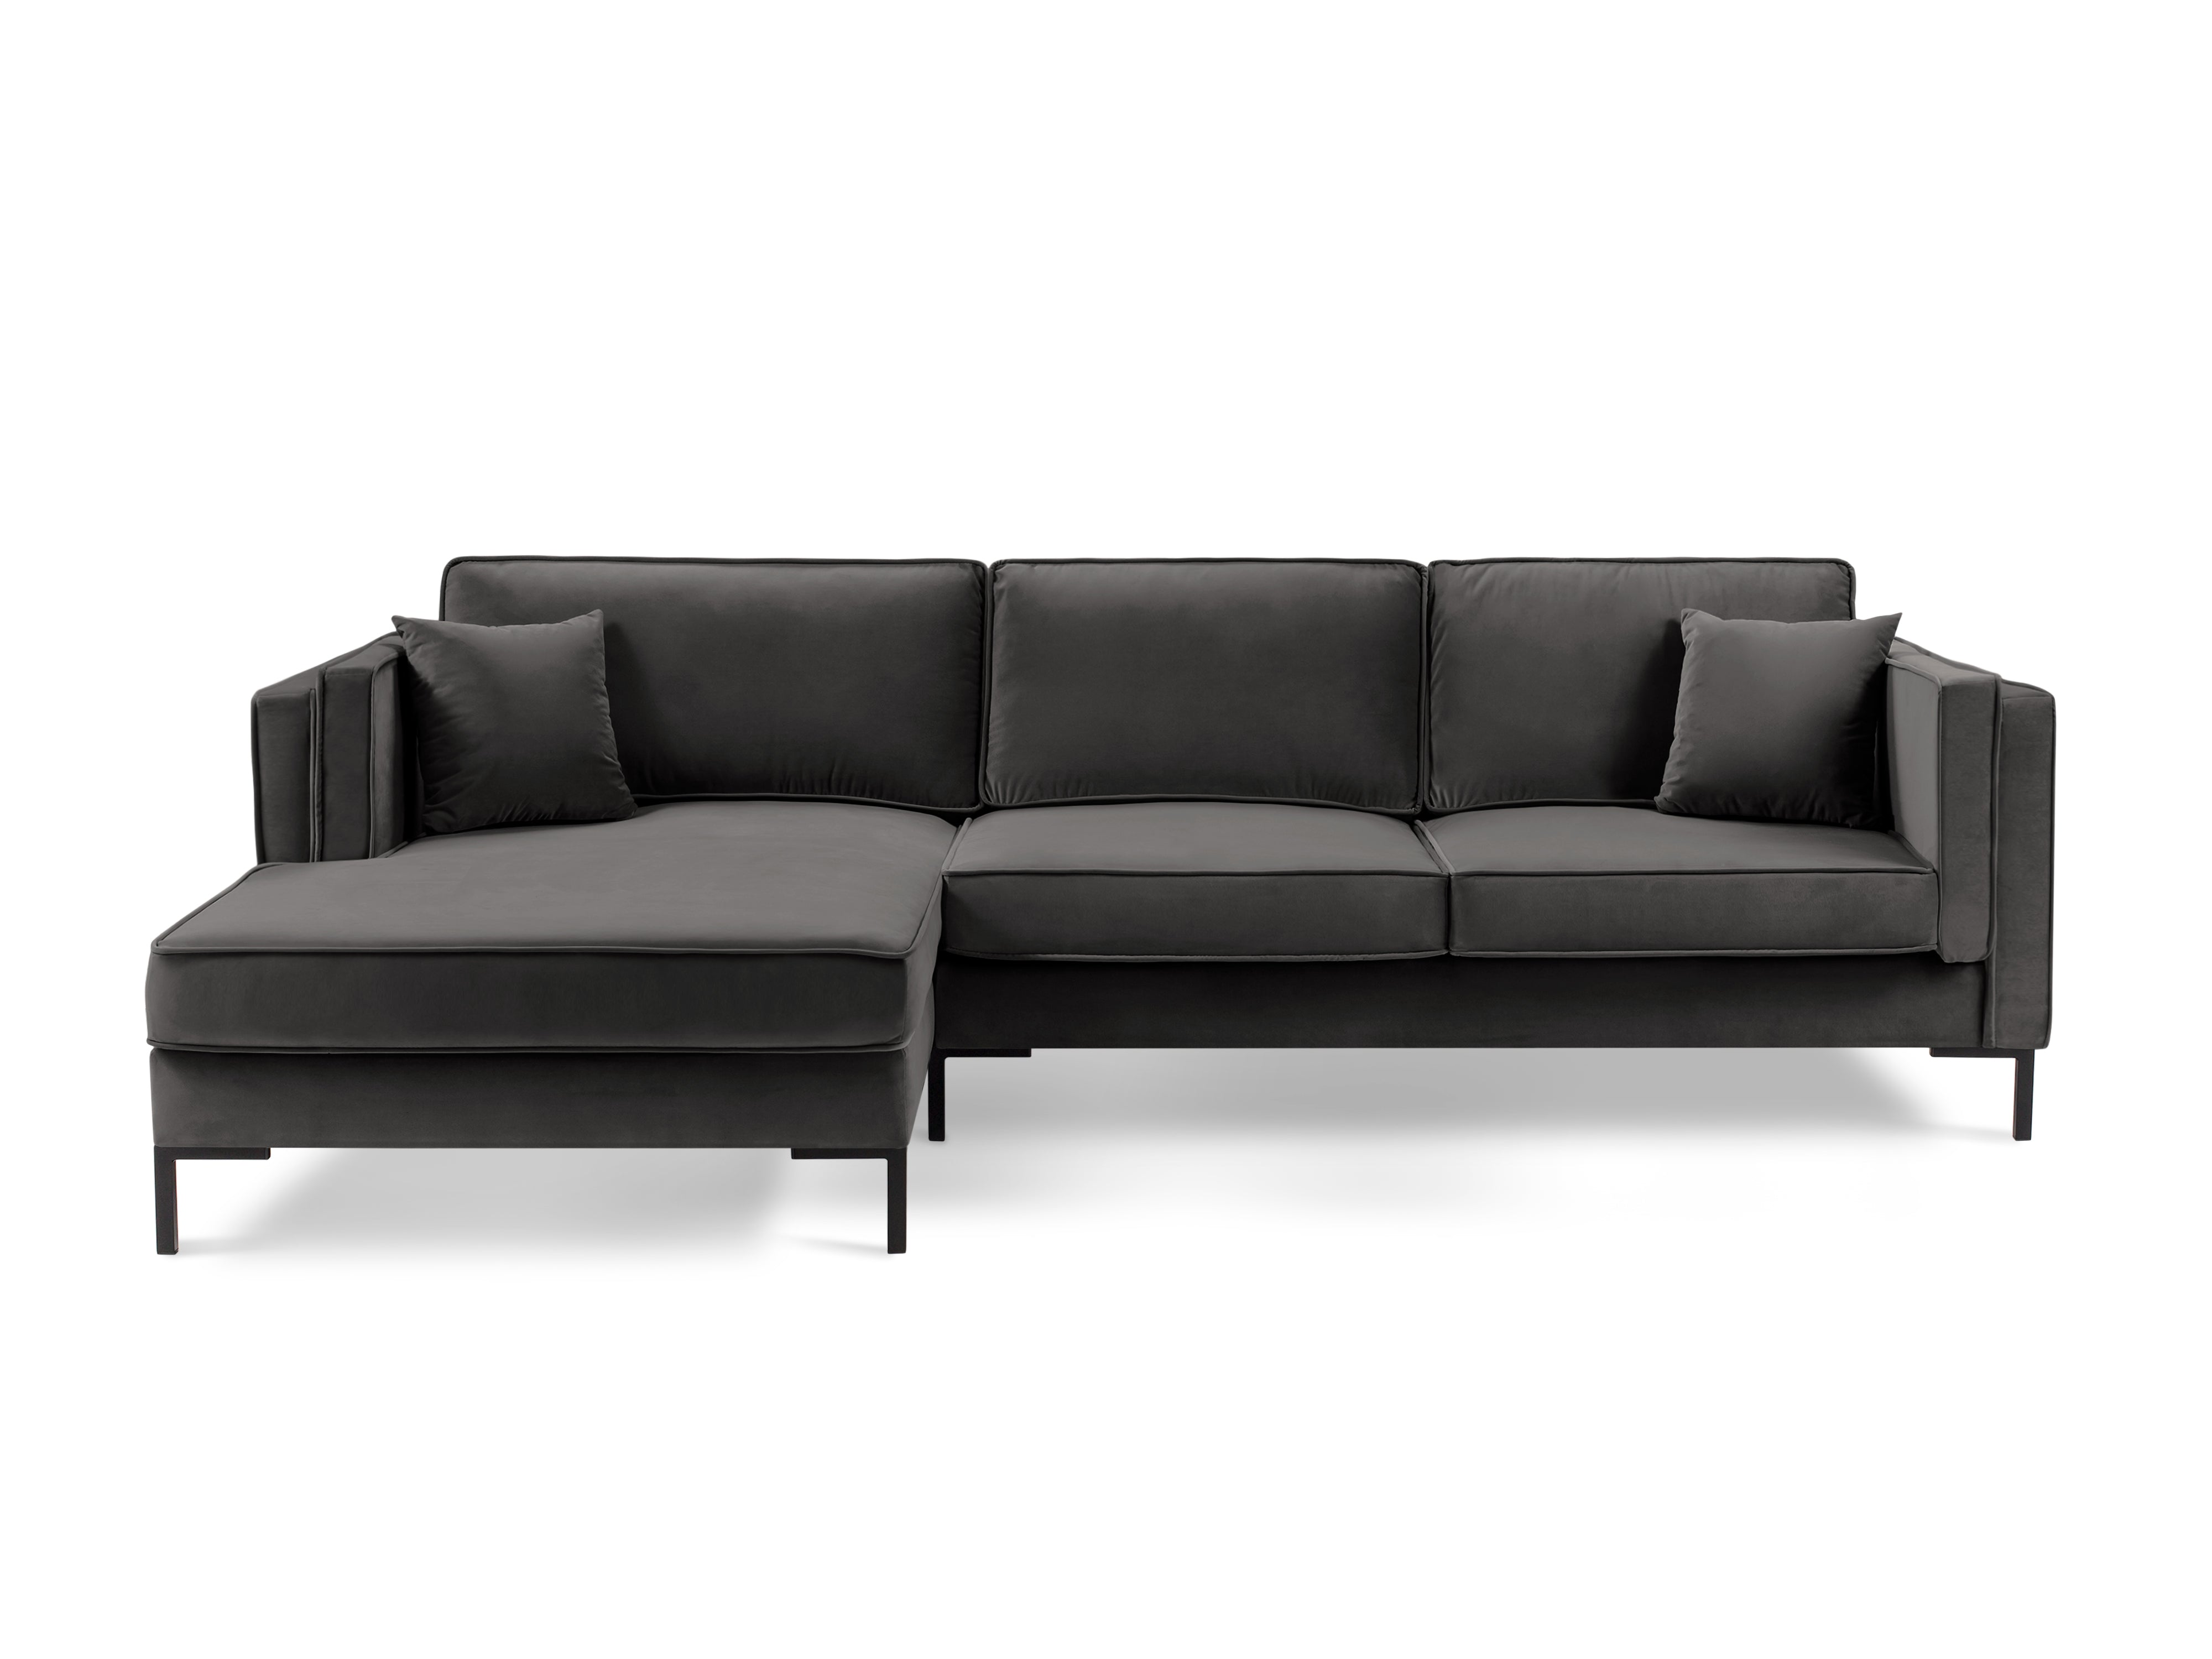 LUIS dark grey velvet left-hand corner sofa with black base